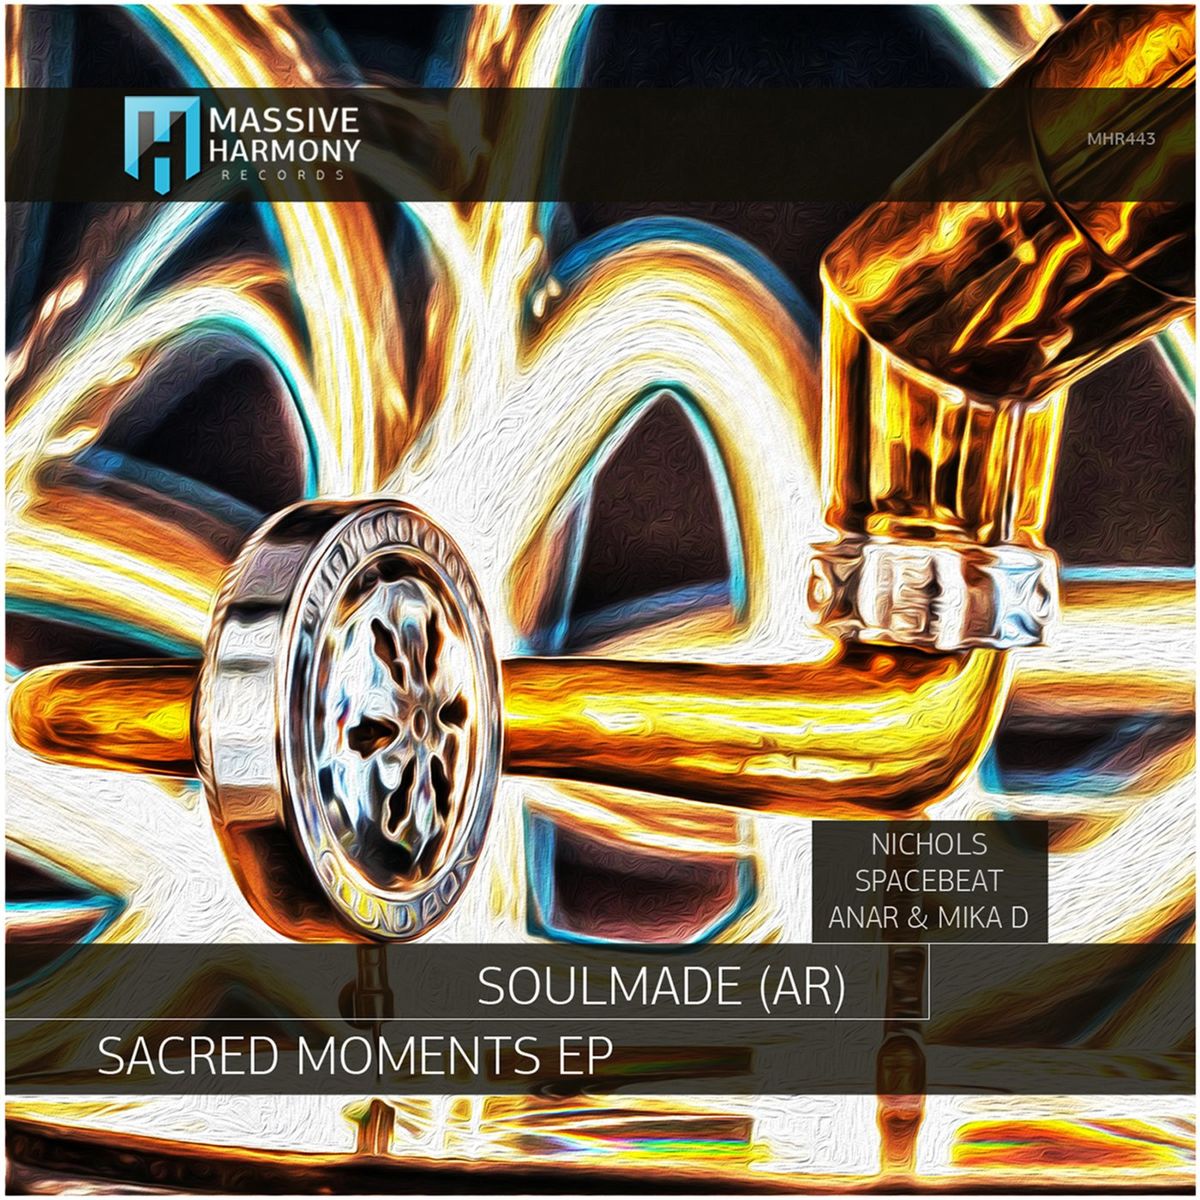 Soulmade (AR) - Sacred Moments EP [MHR443]